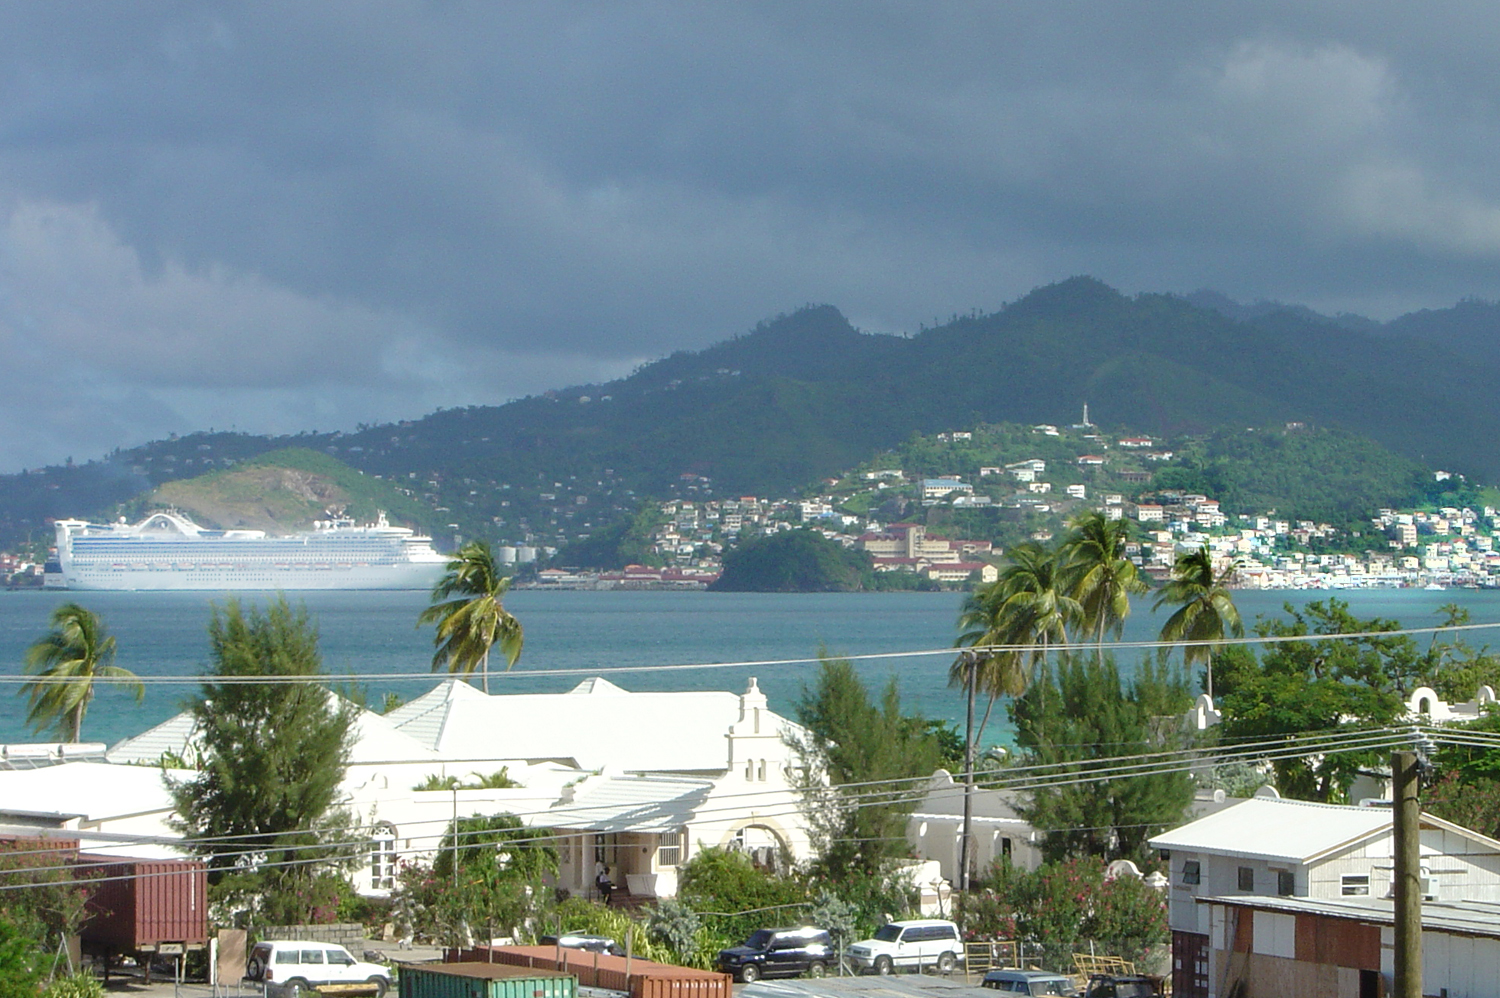 Cruise ship reaching the Caribbean Island Grenada